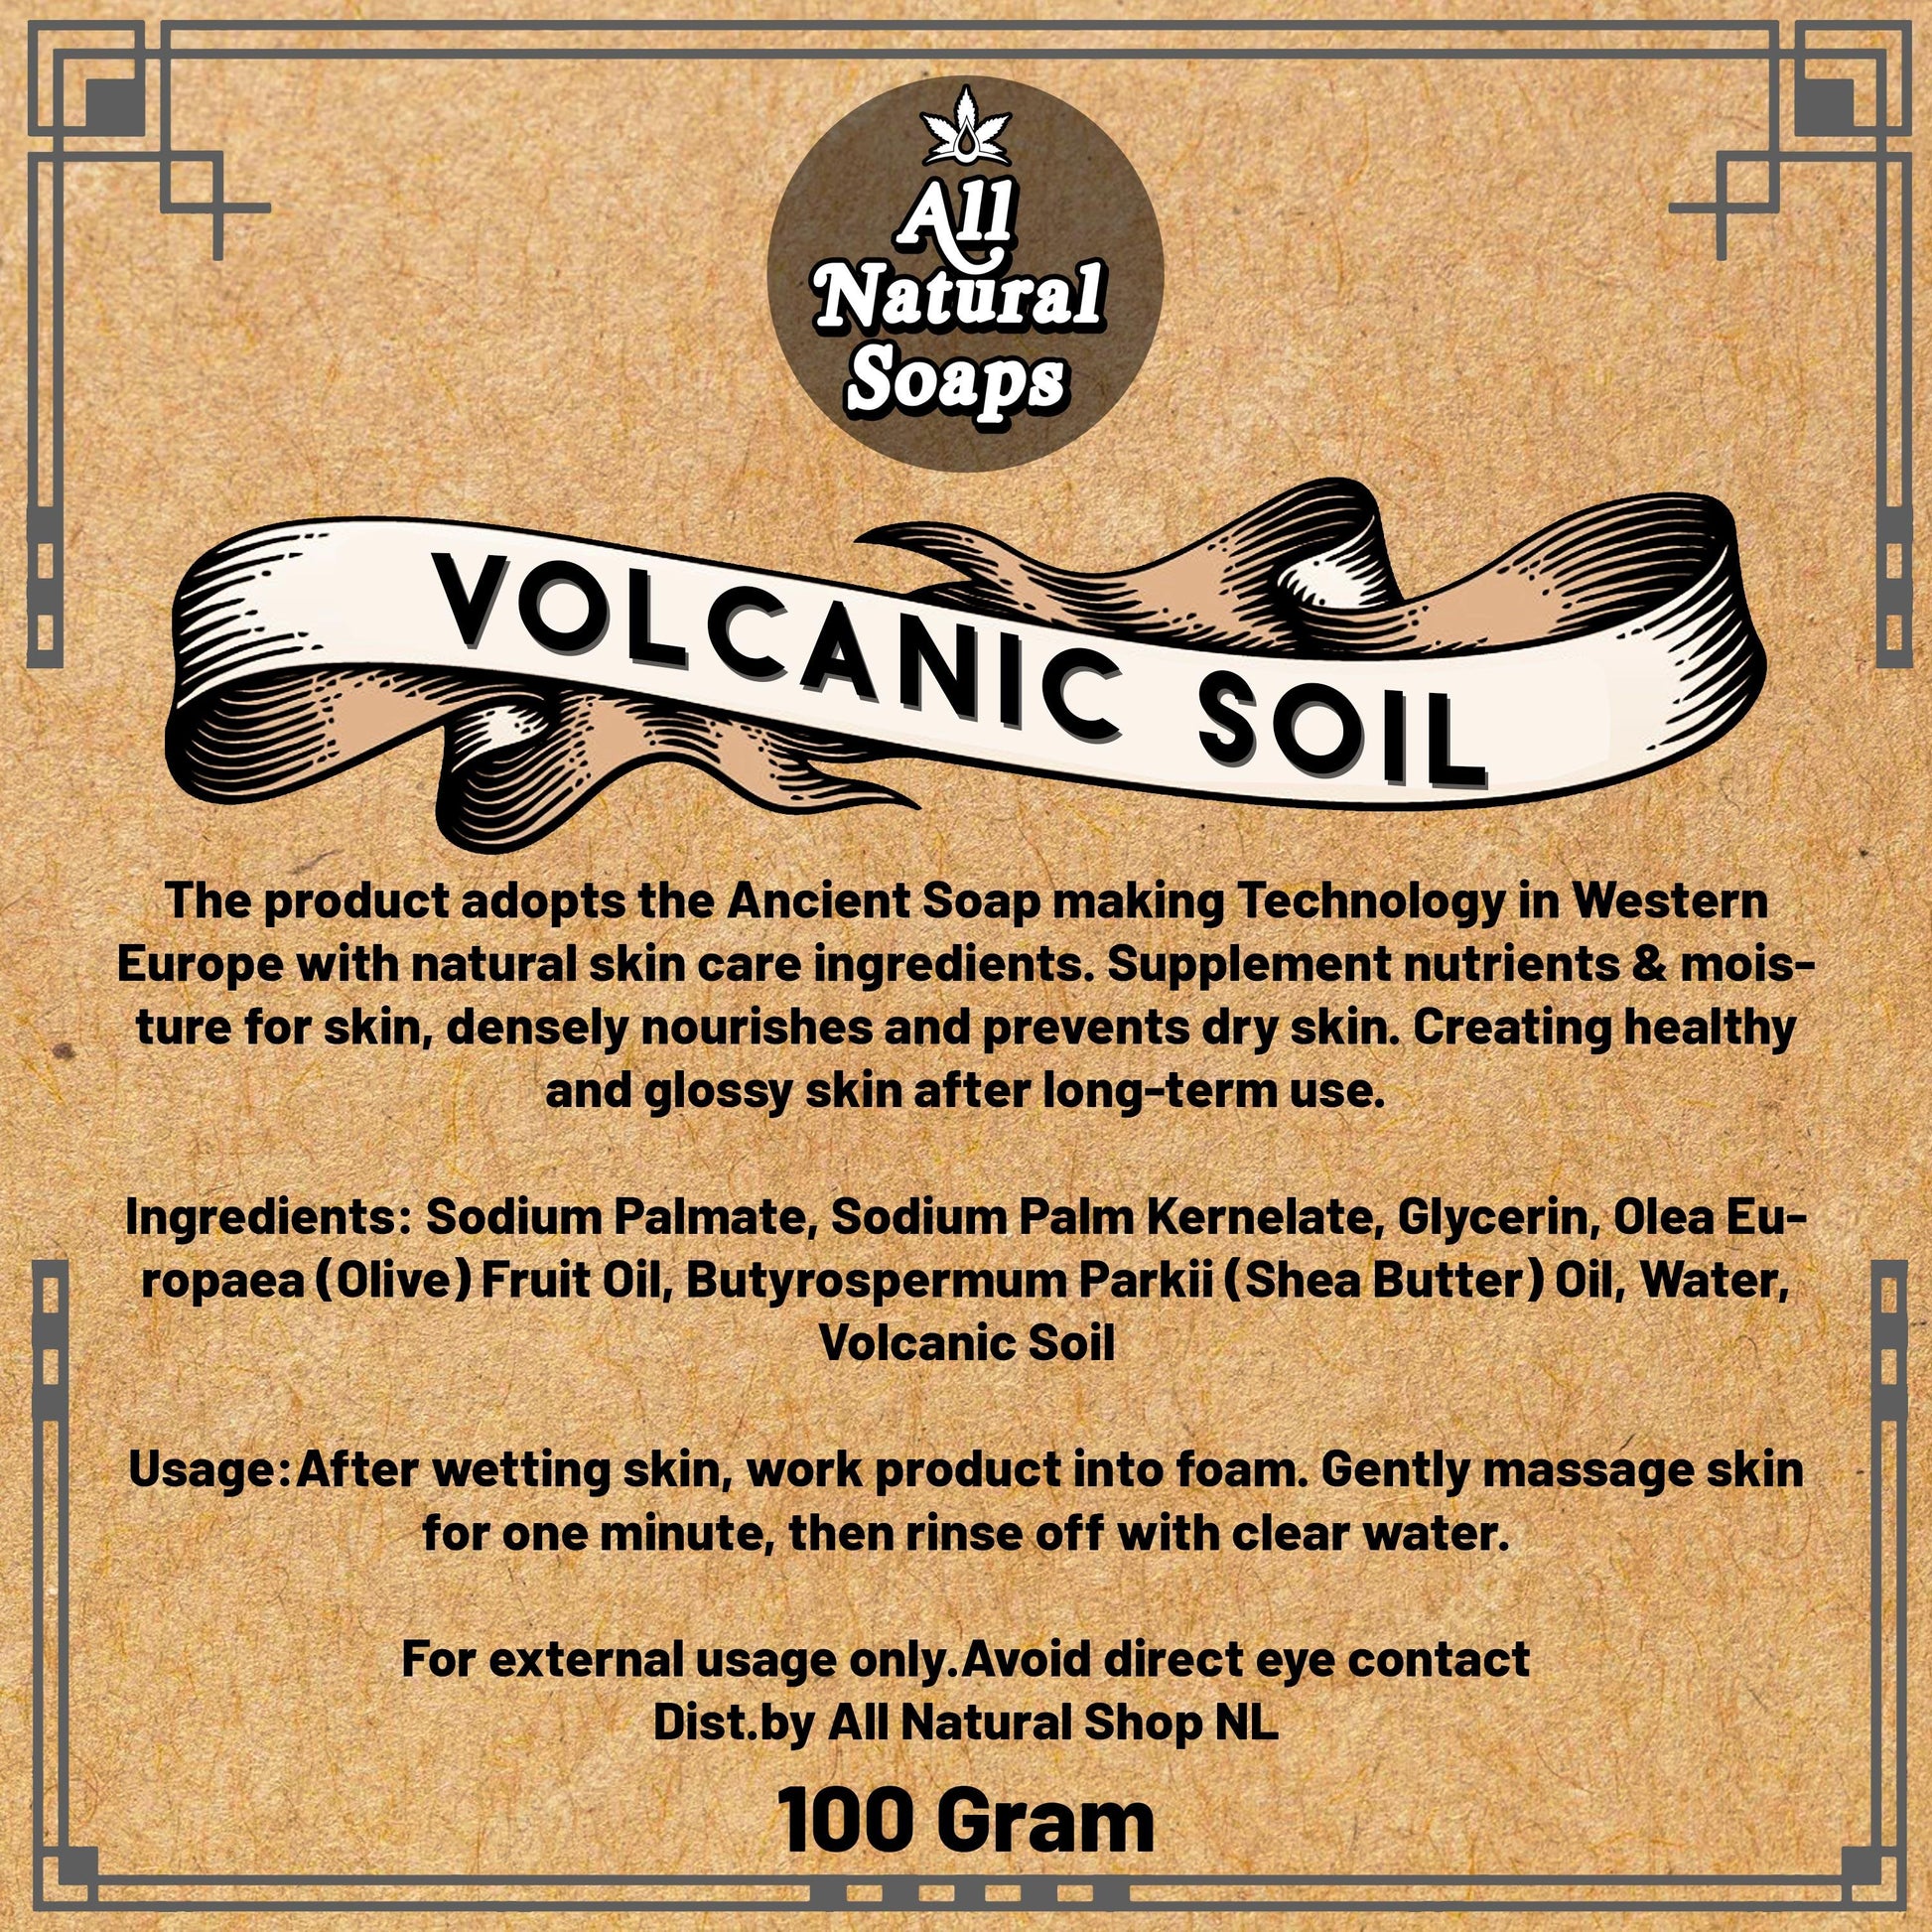 Natural Soap - Volcanic Soil - All Natural Soaps